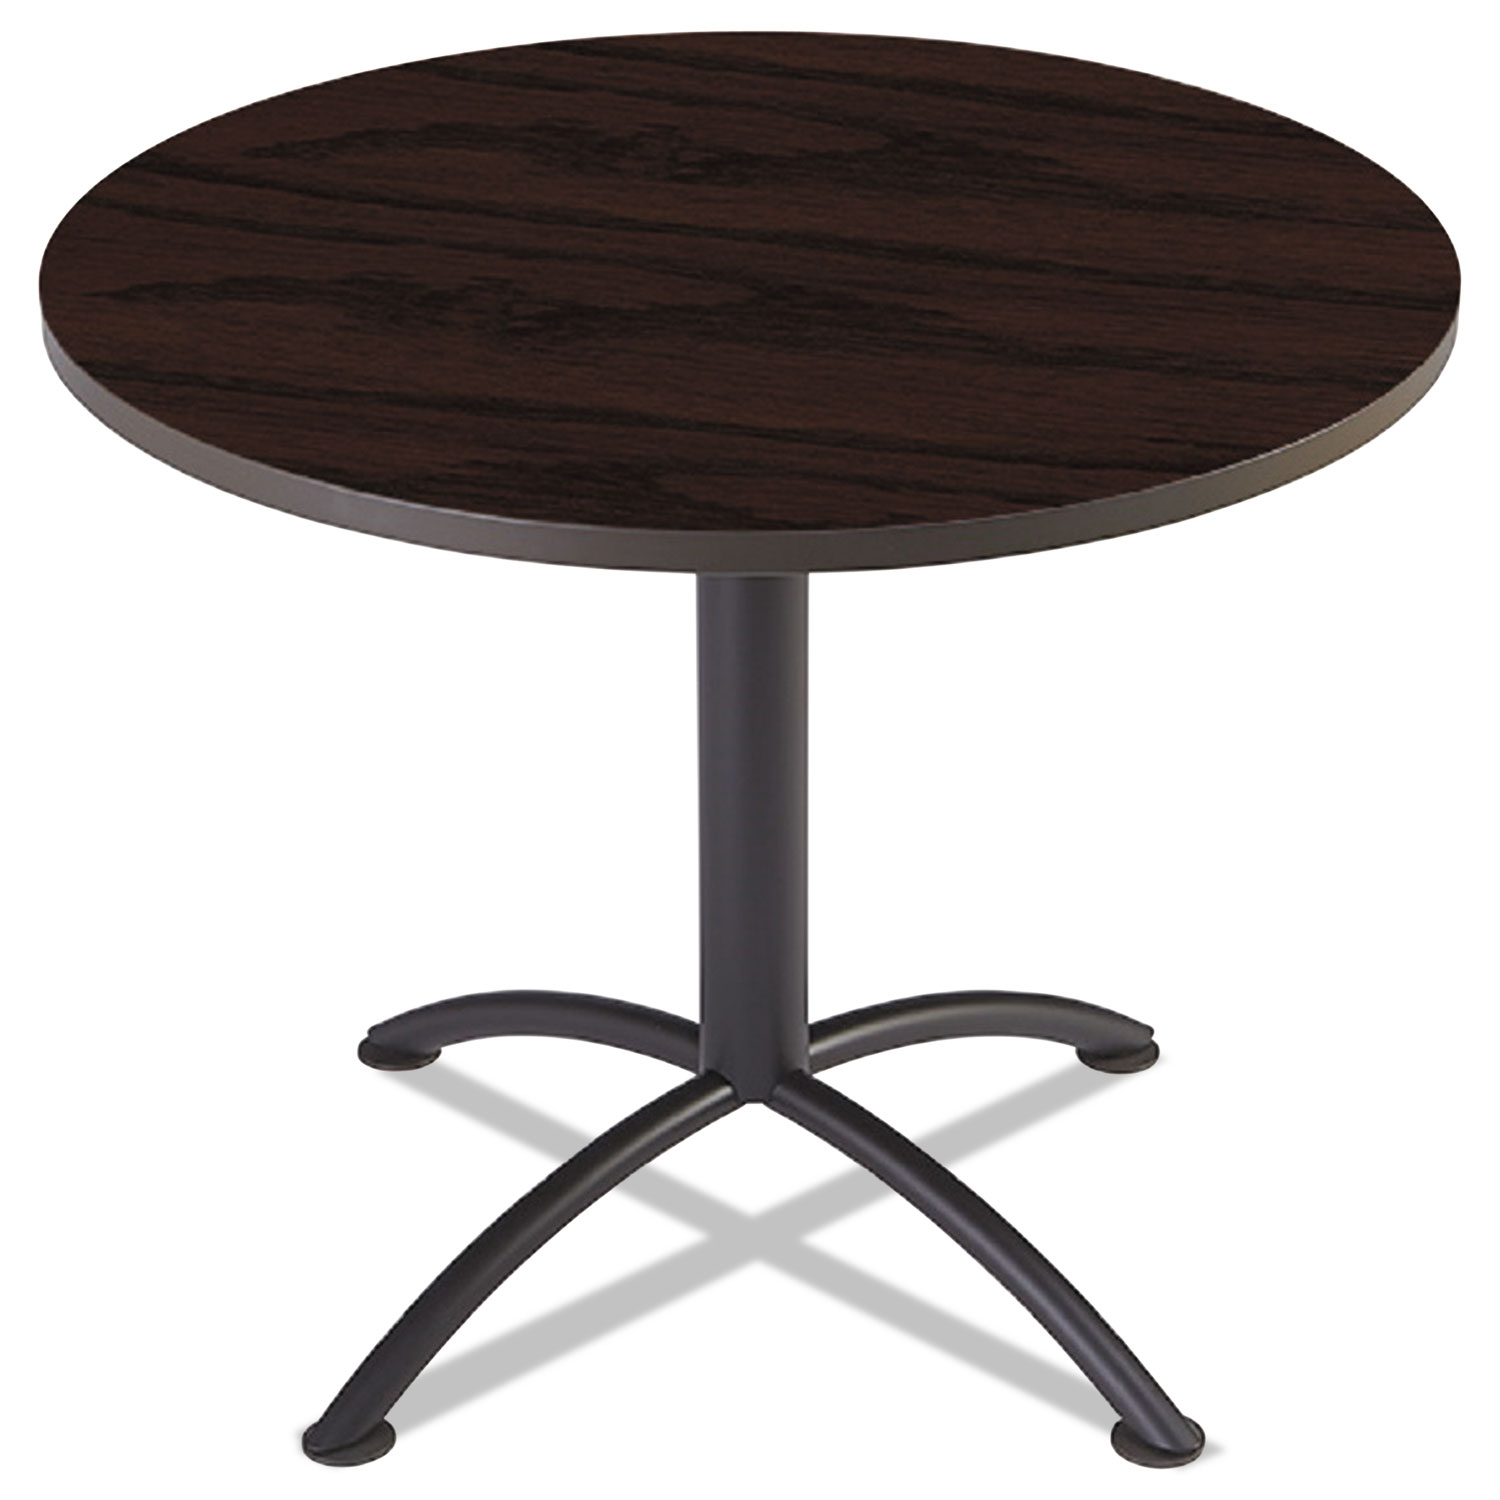 iLand Table, Contour, Round Seated Style, 36 dia. x 29, Mahogany/Black